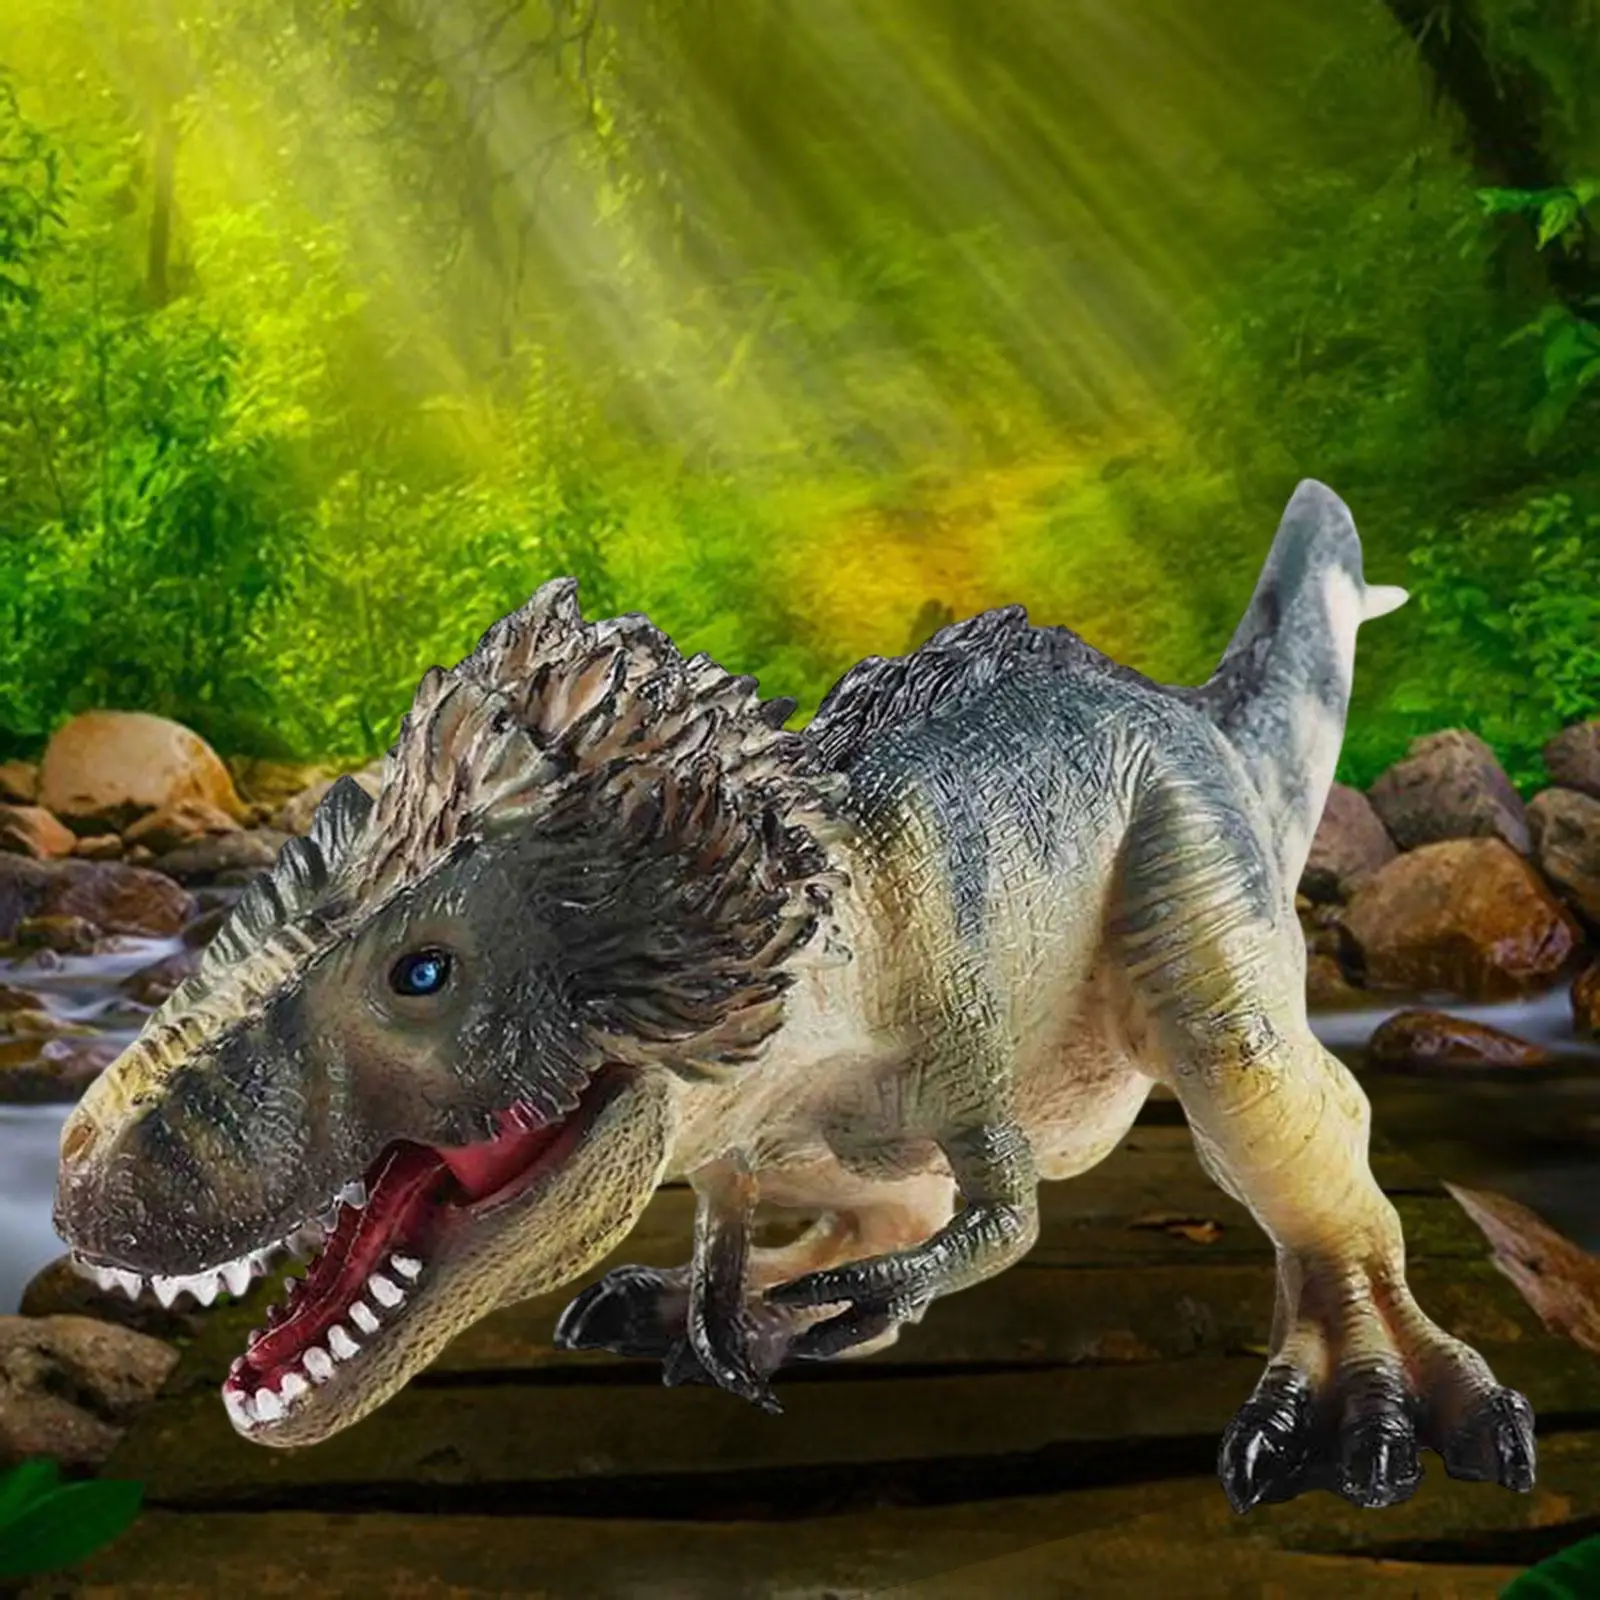 Realistic Dinosaur Figure Prehistoric Animals for Birthday Gift Theme Party